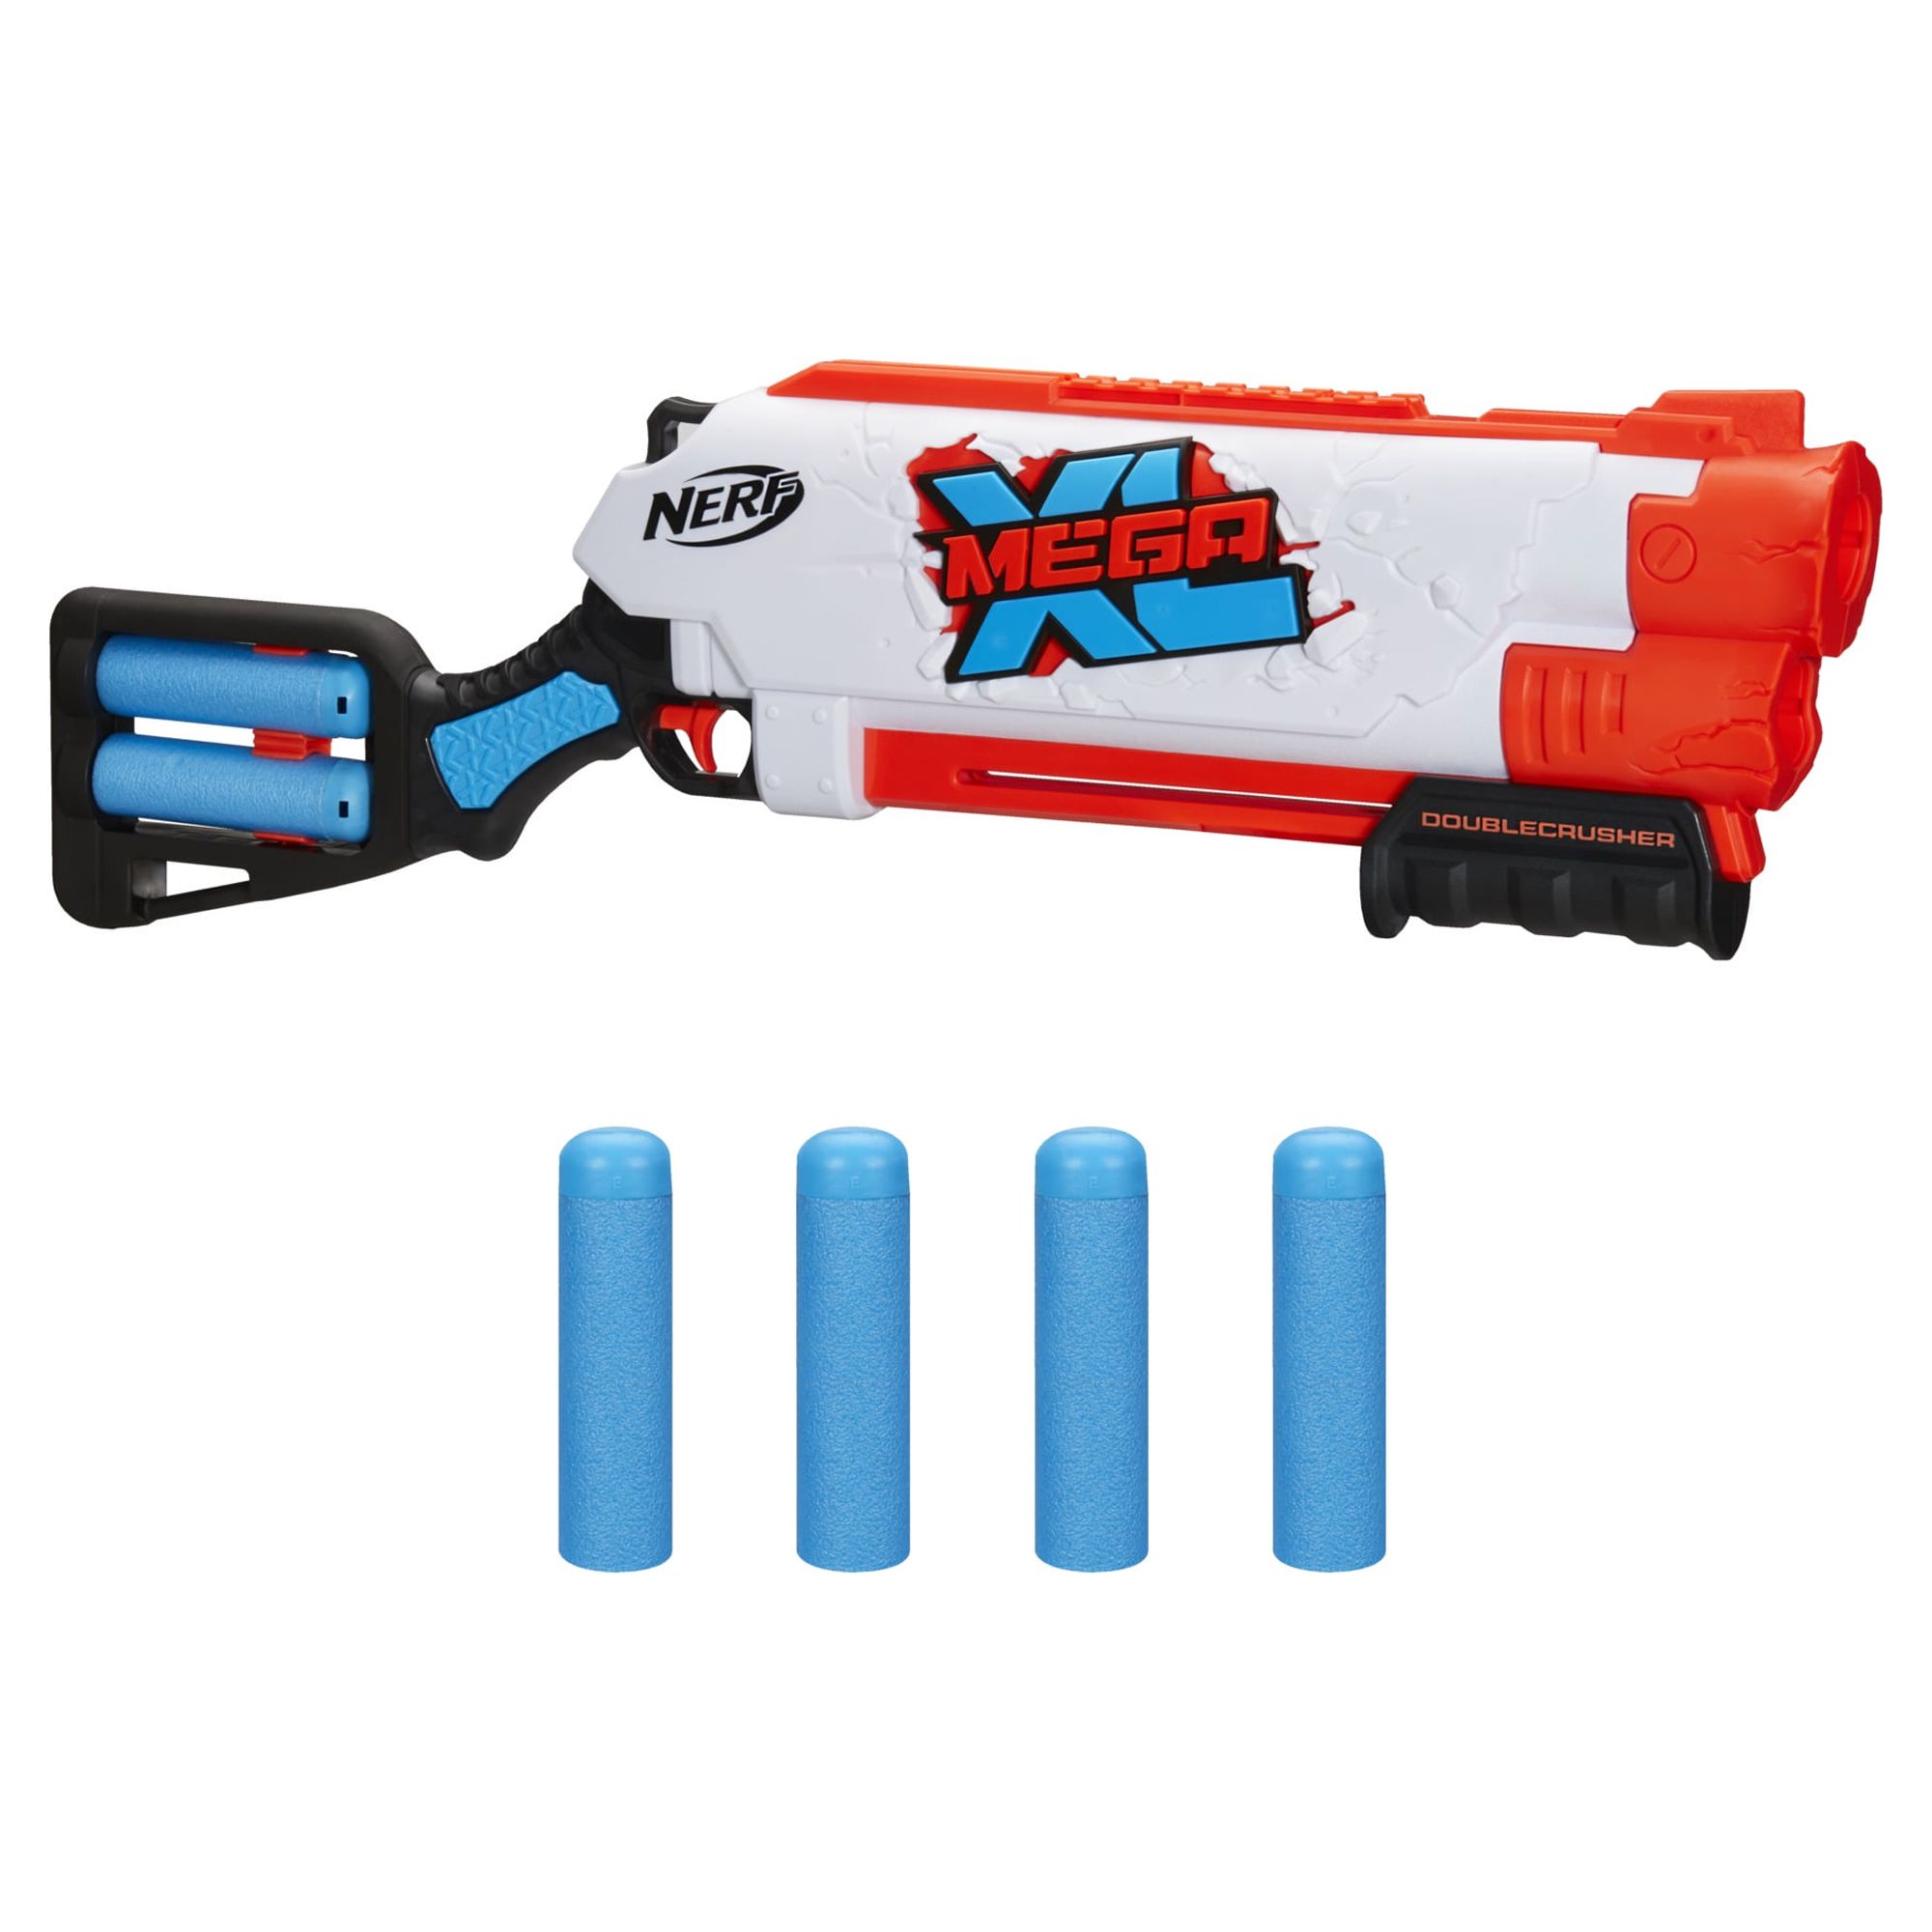 Nerf Mega XL Double Crusher Blaster, 4 Mega XL Whistler Darts - image 1 of 9